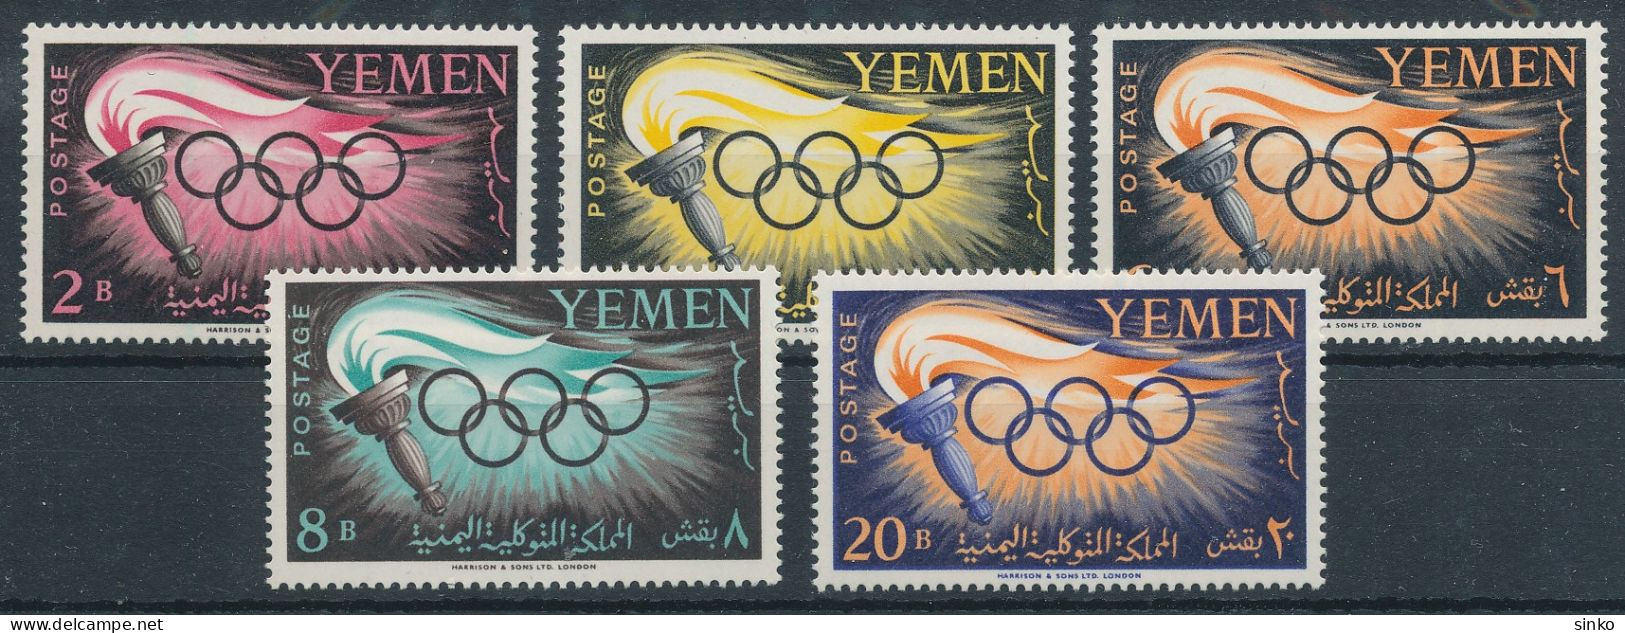 1960. Yemen - Olympics - Ete 1960: Rome